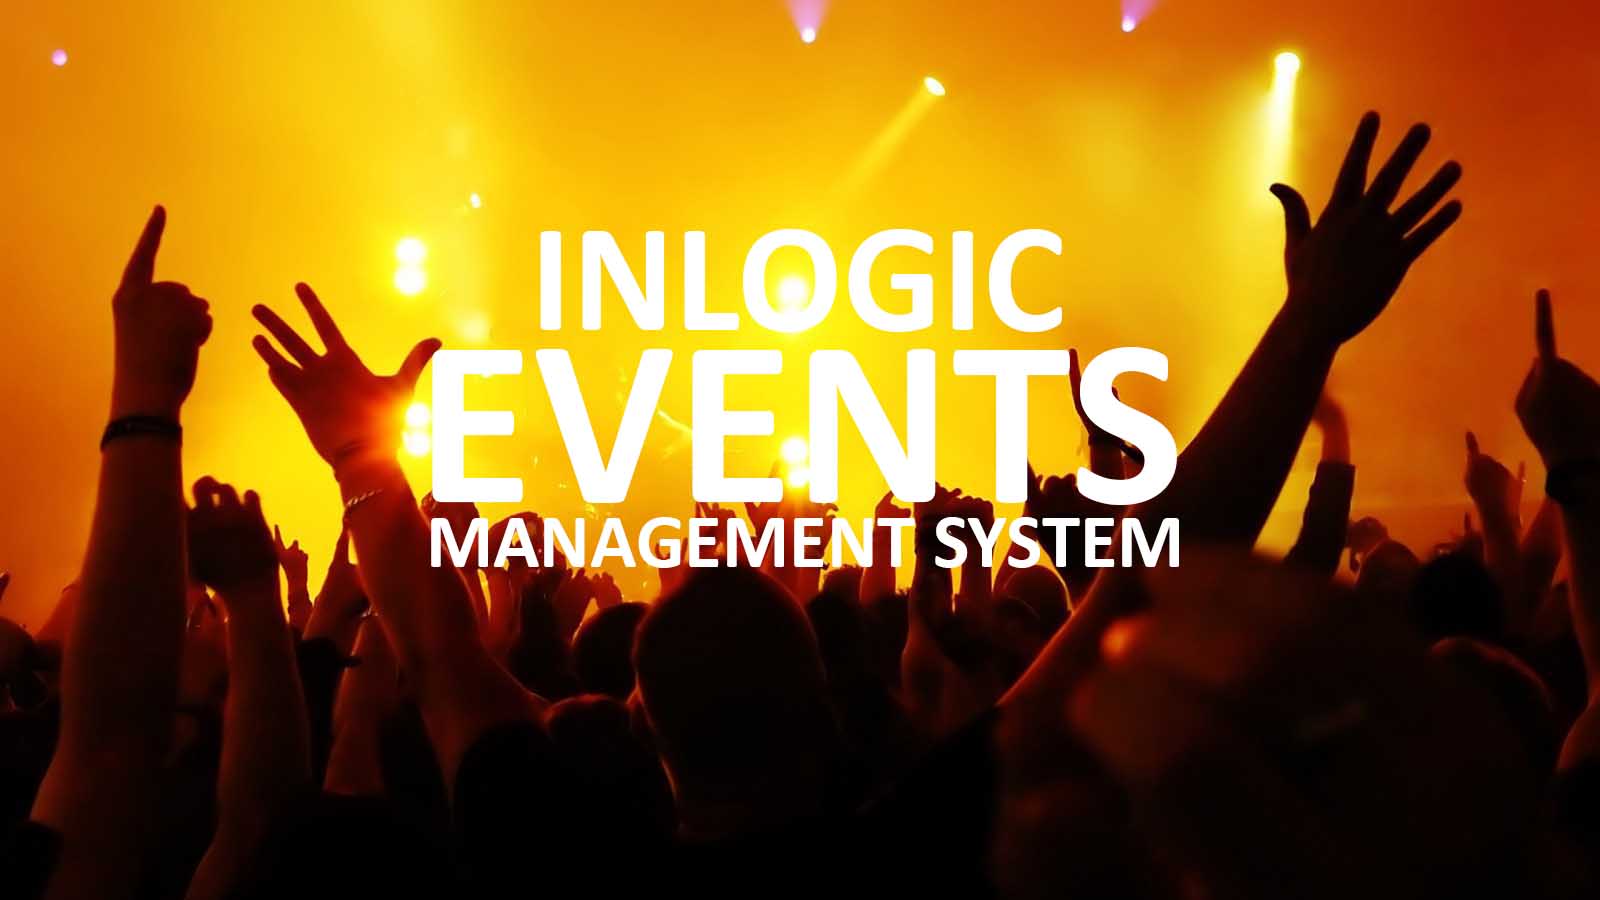 InLogic Events Management Solution Dubai